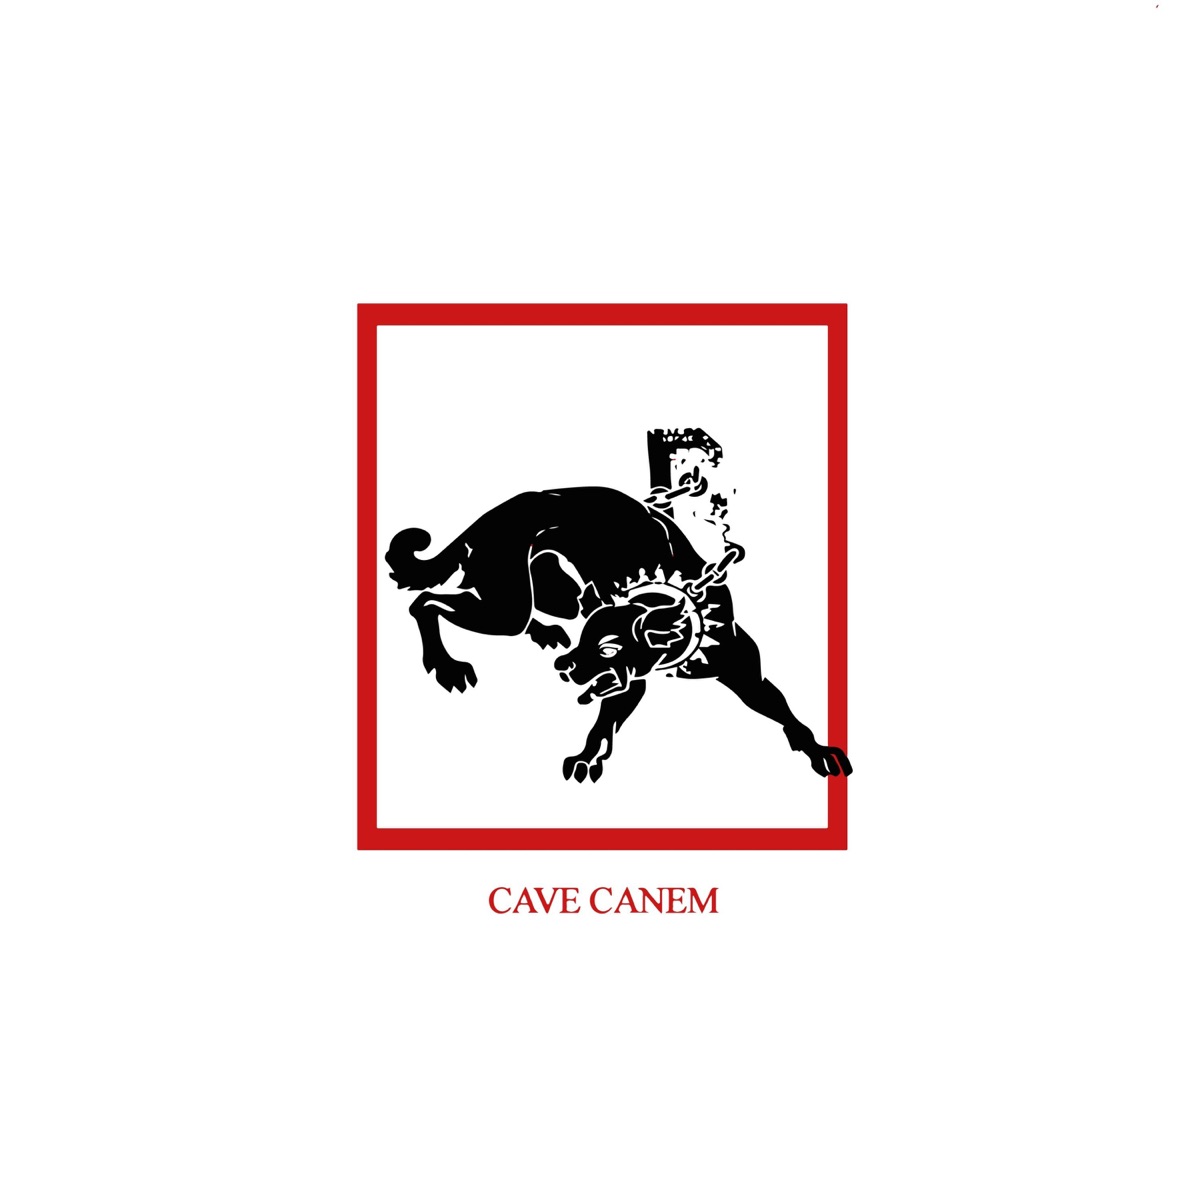 Cave Canem - Album by Bsxbc - Apple Music